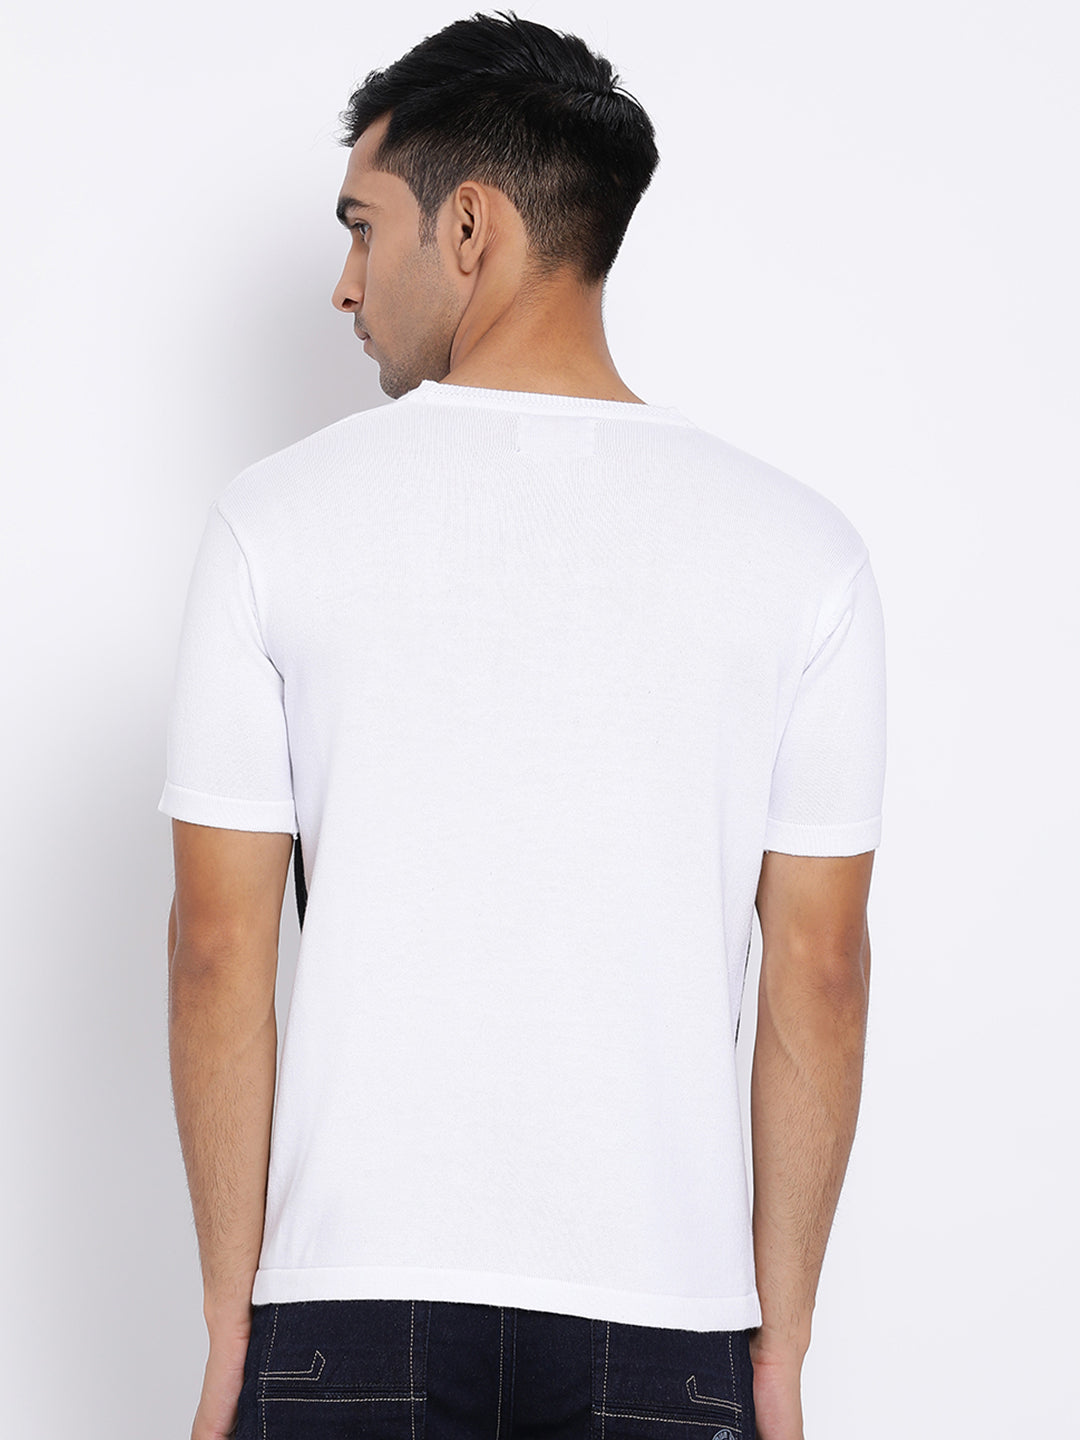 Cobb White Round Neck T-Shirt